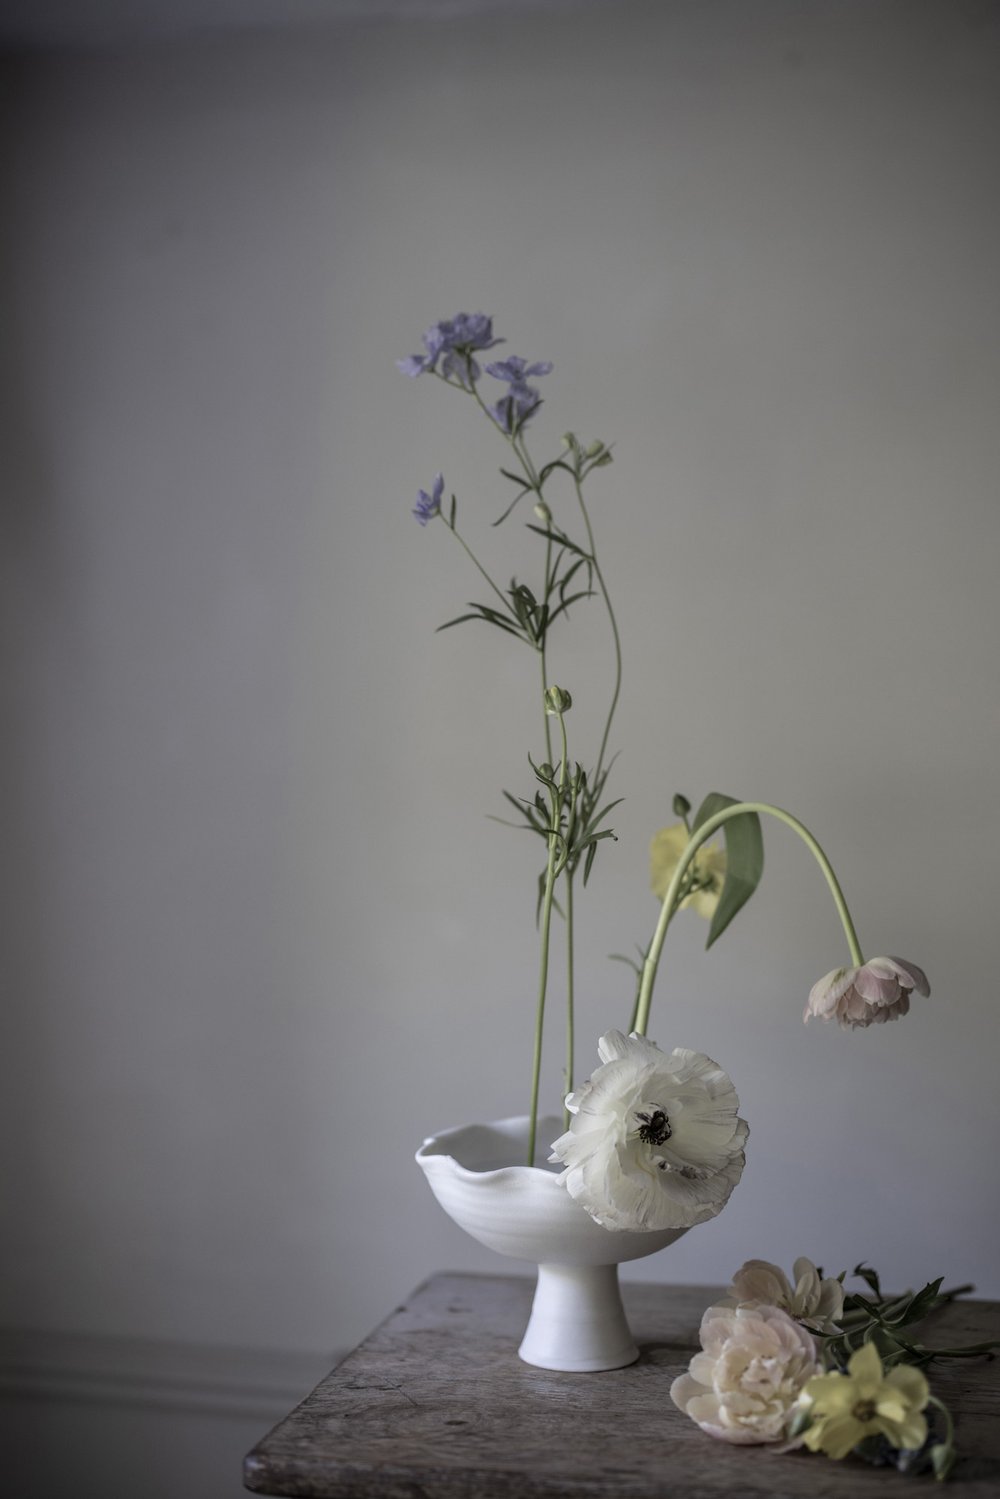 Paper-thin-moon-flower-frog-bowl-5.jpg